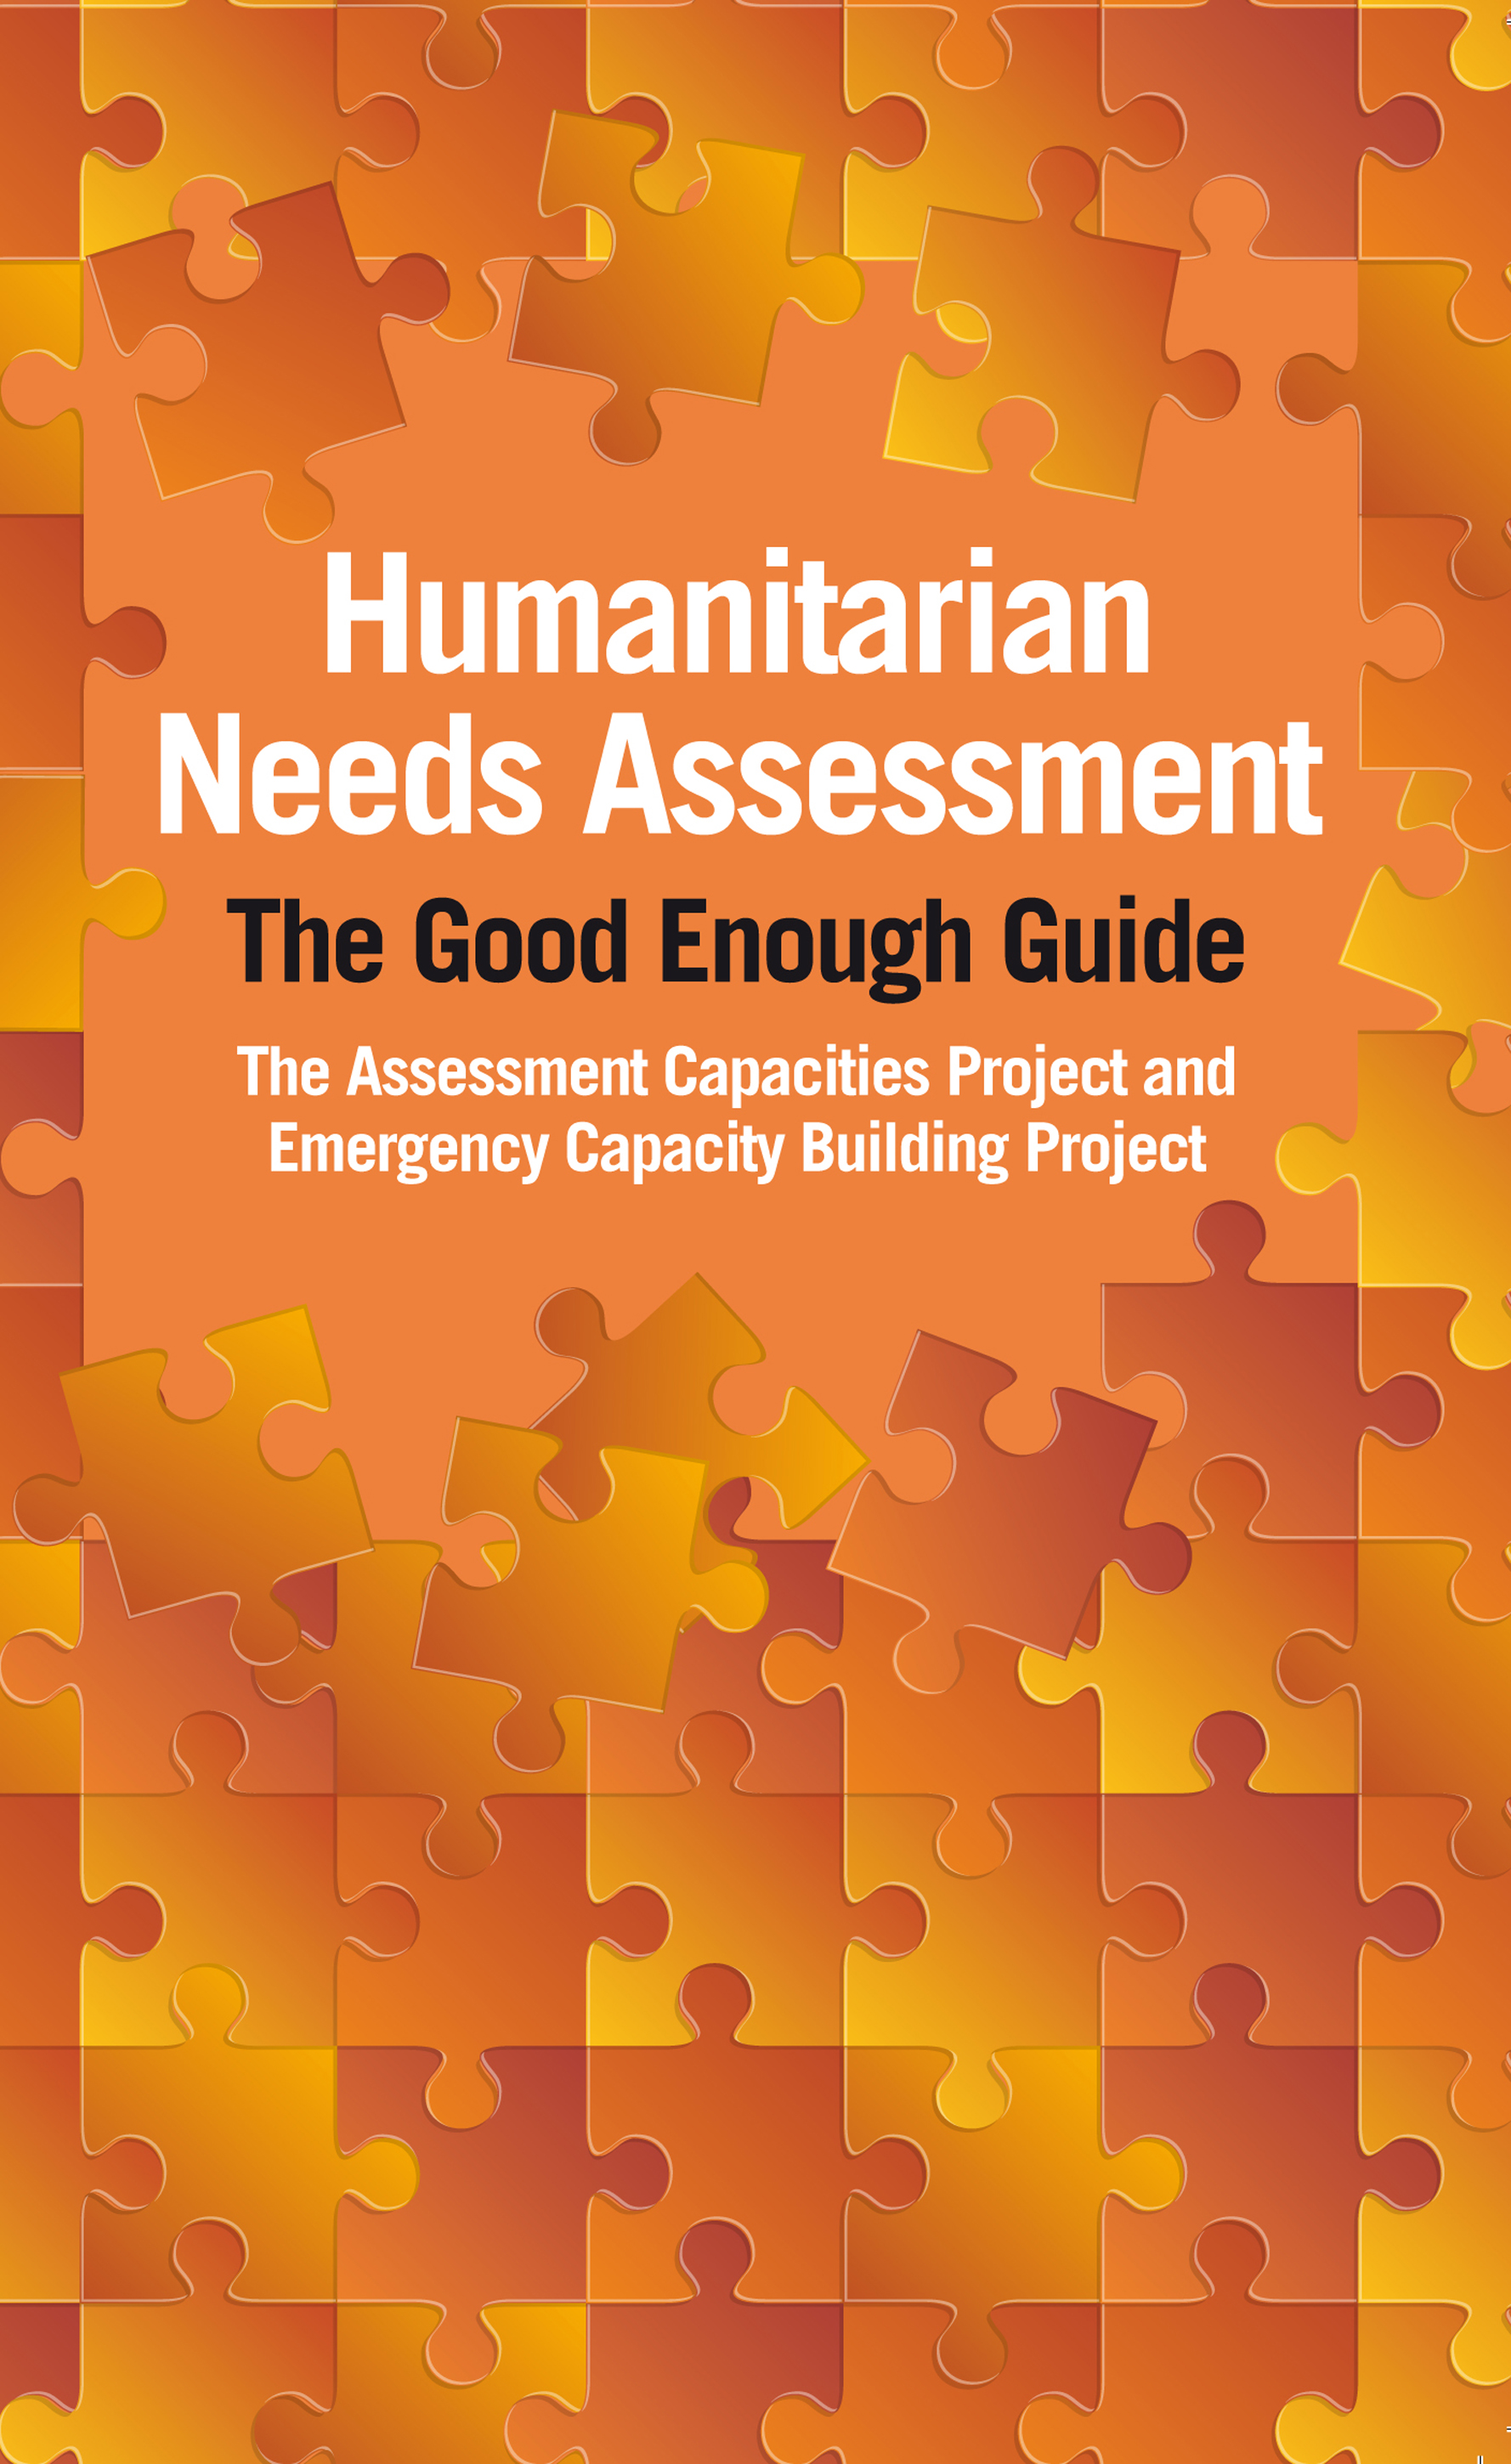 qualitative and quantitative research techniques for humanitarian needs assessment